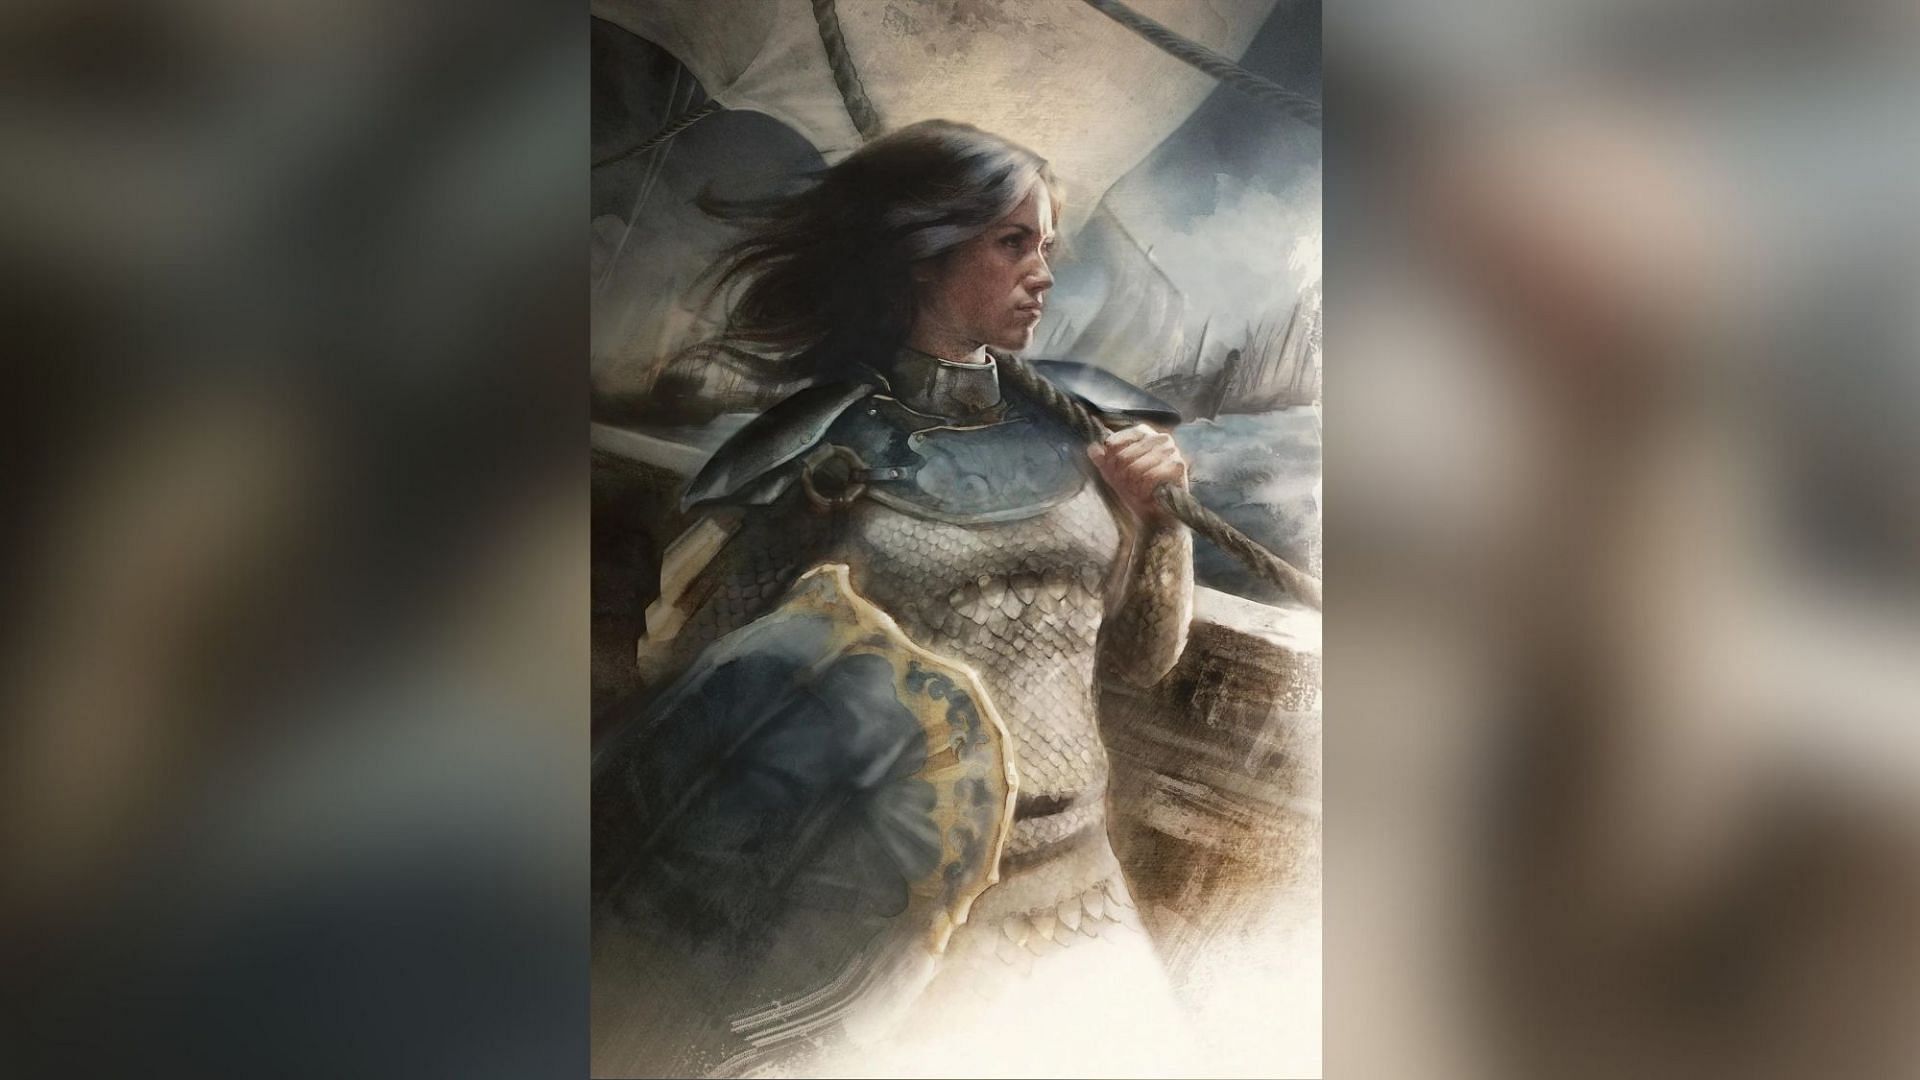 An illustration of Princess Nymeria by J.K. Drummond